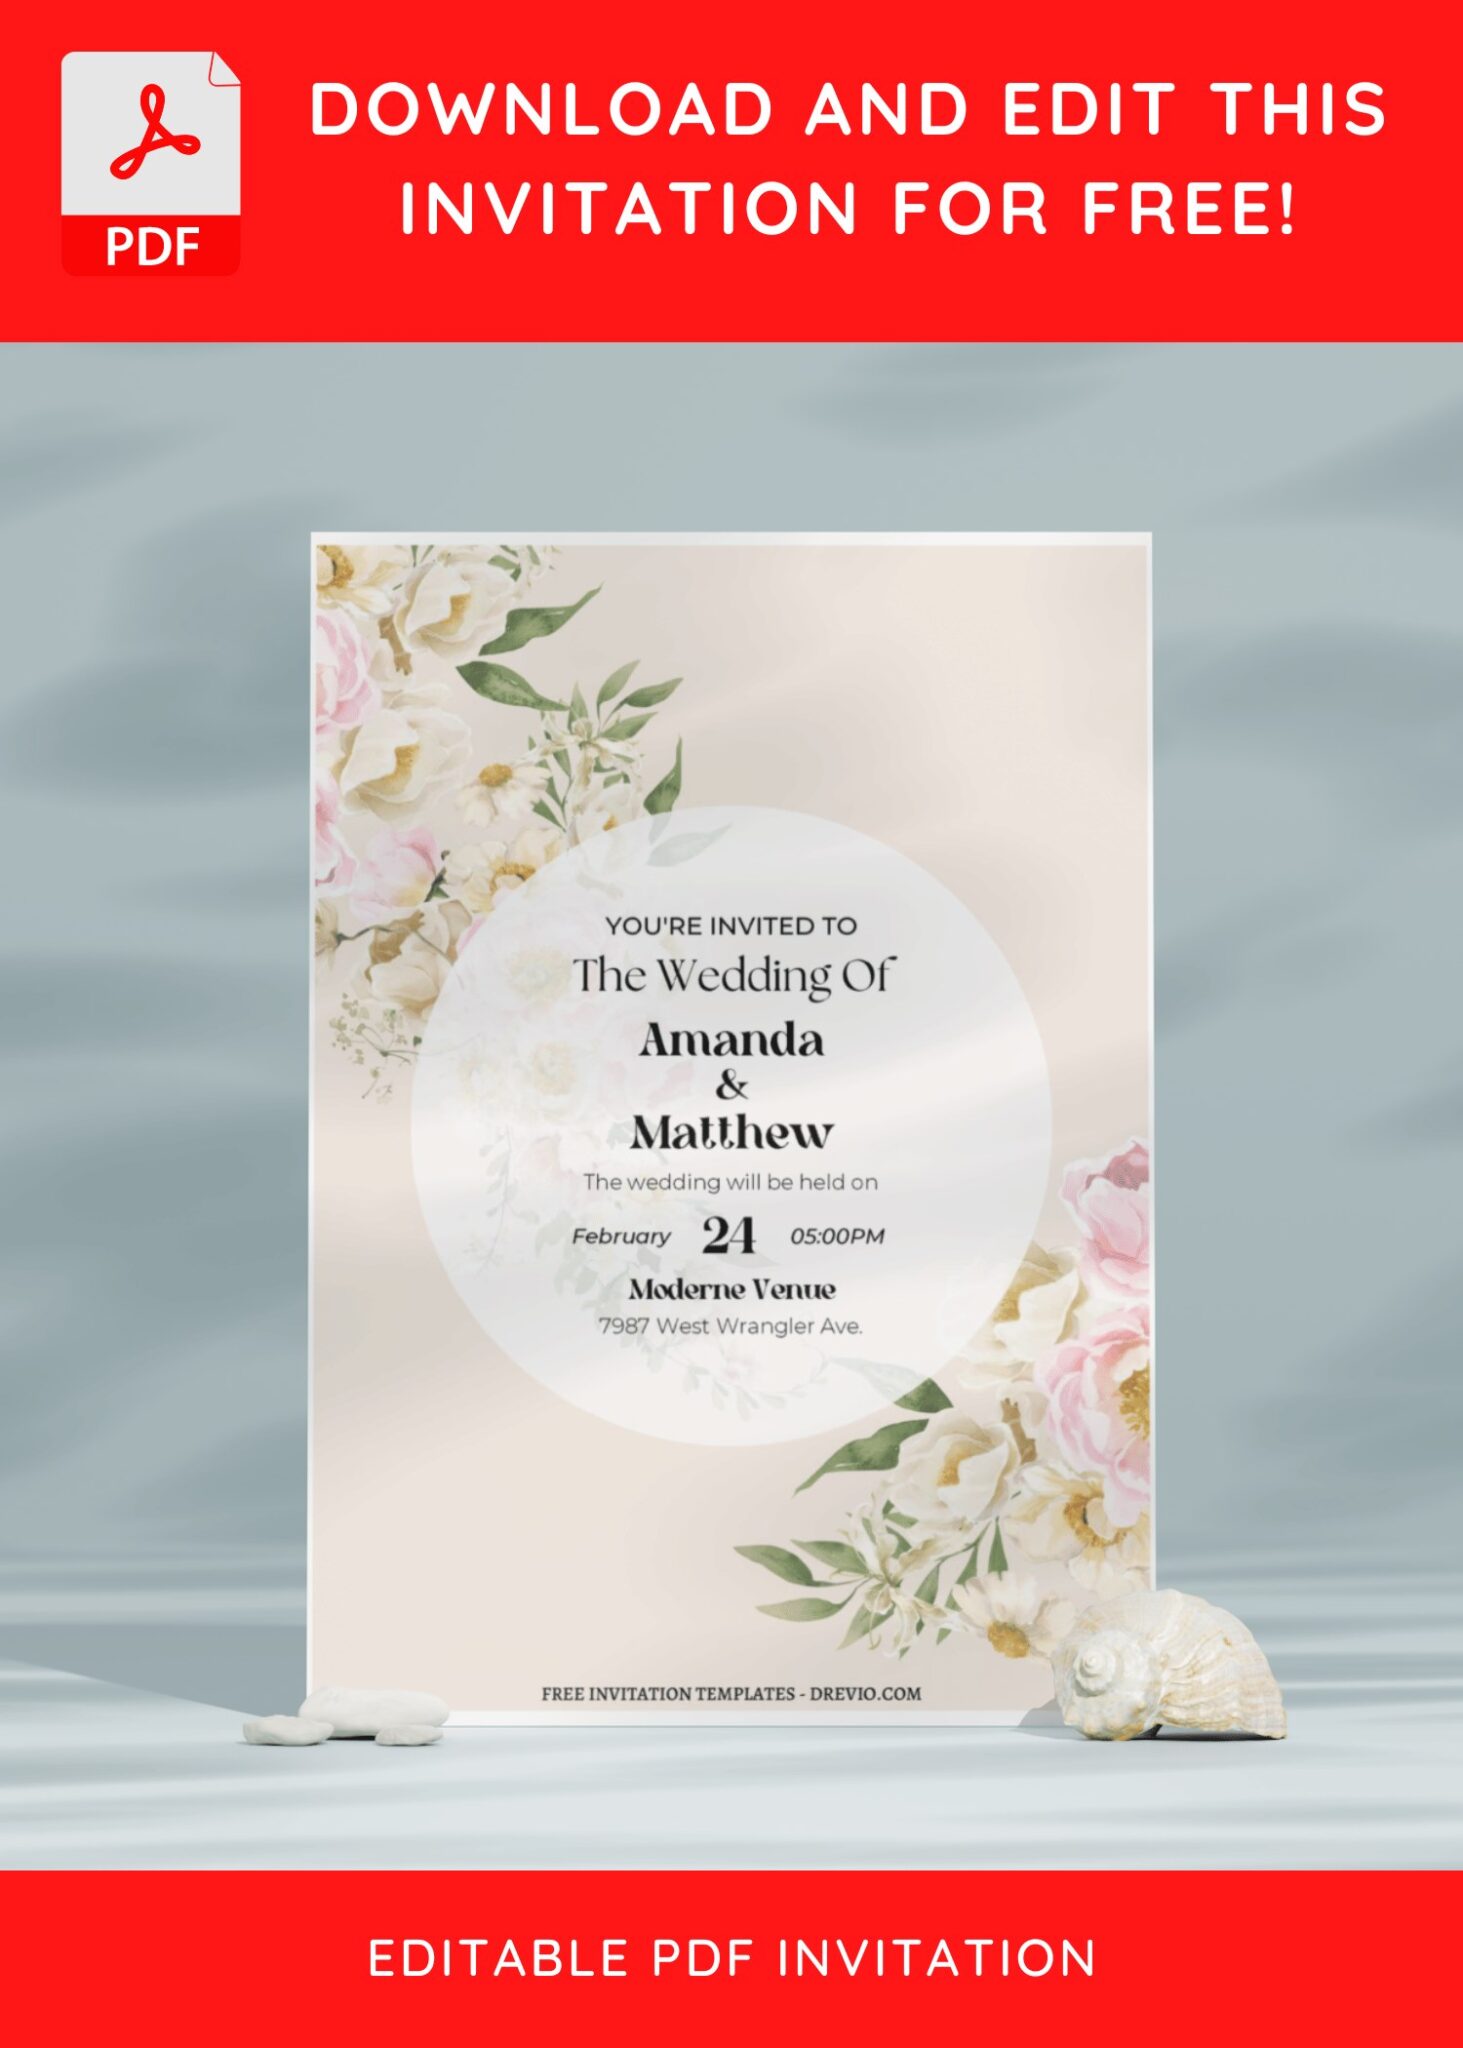 (Free Editable PDF) Whimsical Wreath Wedding Invitation Templates ...